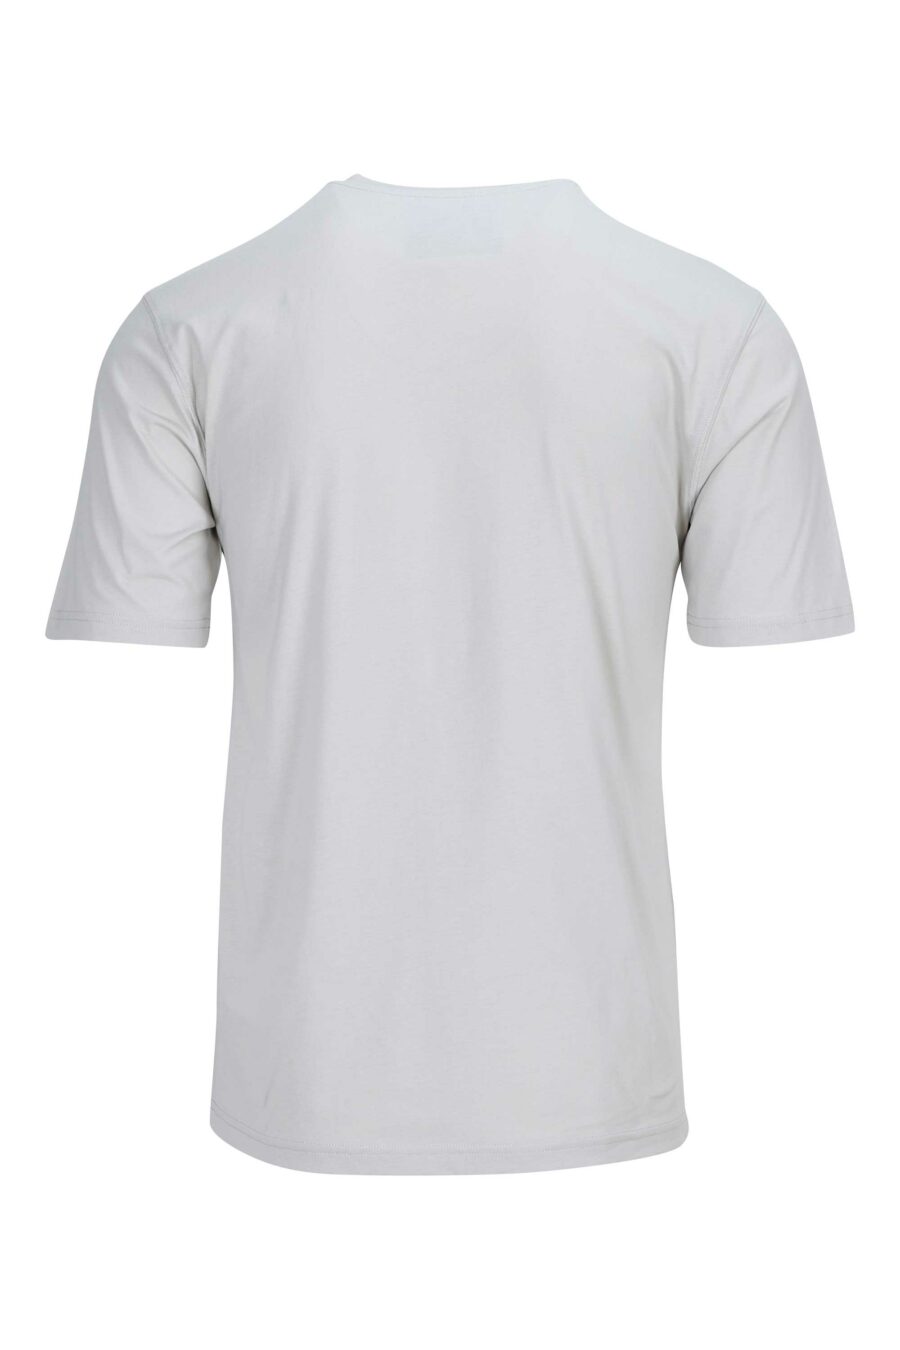 T-shirt grau mit Maxilogo "Moschino" Ticket - 889316954807 1